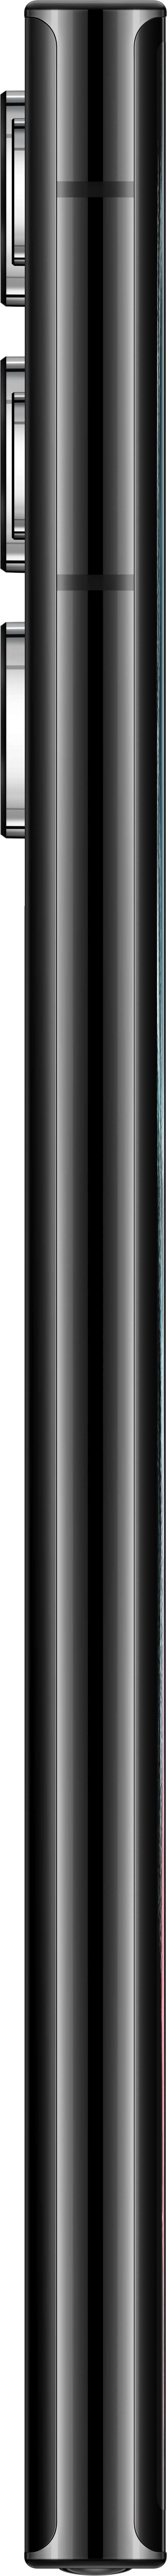 Samsung - Galaxy S22 Ultra 128GB (Unlocked) - Phantom Black_4